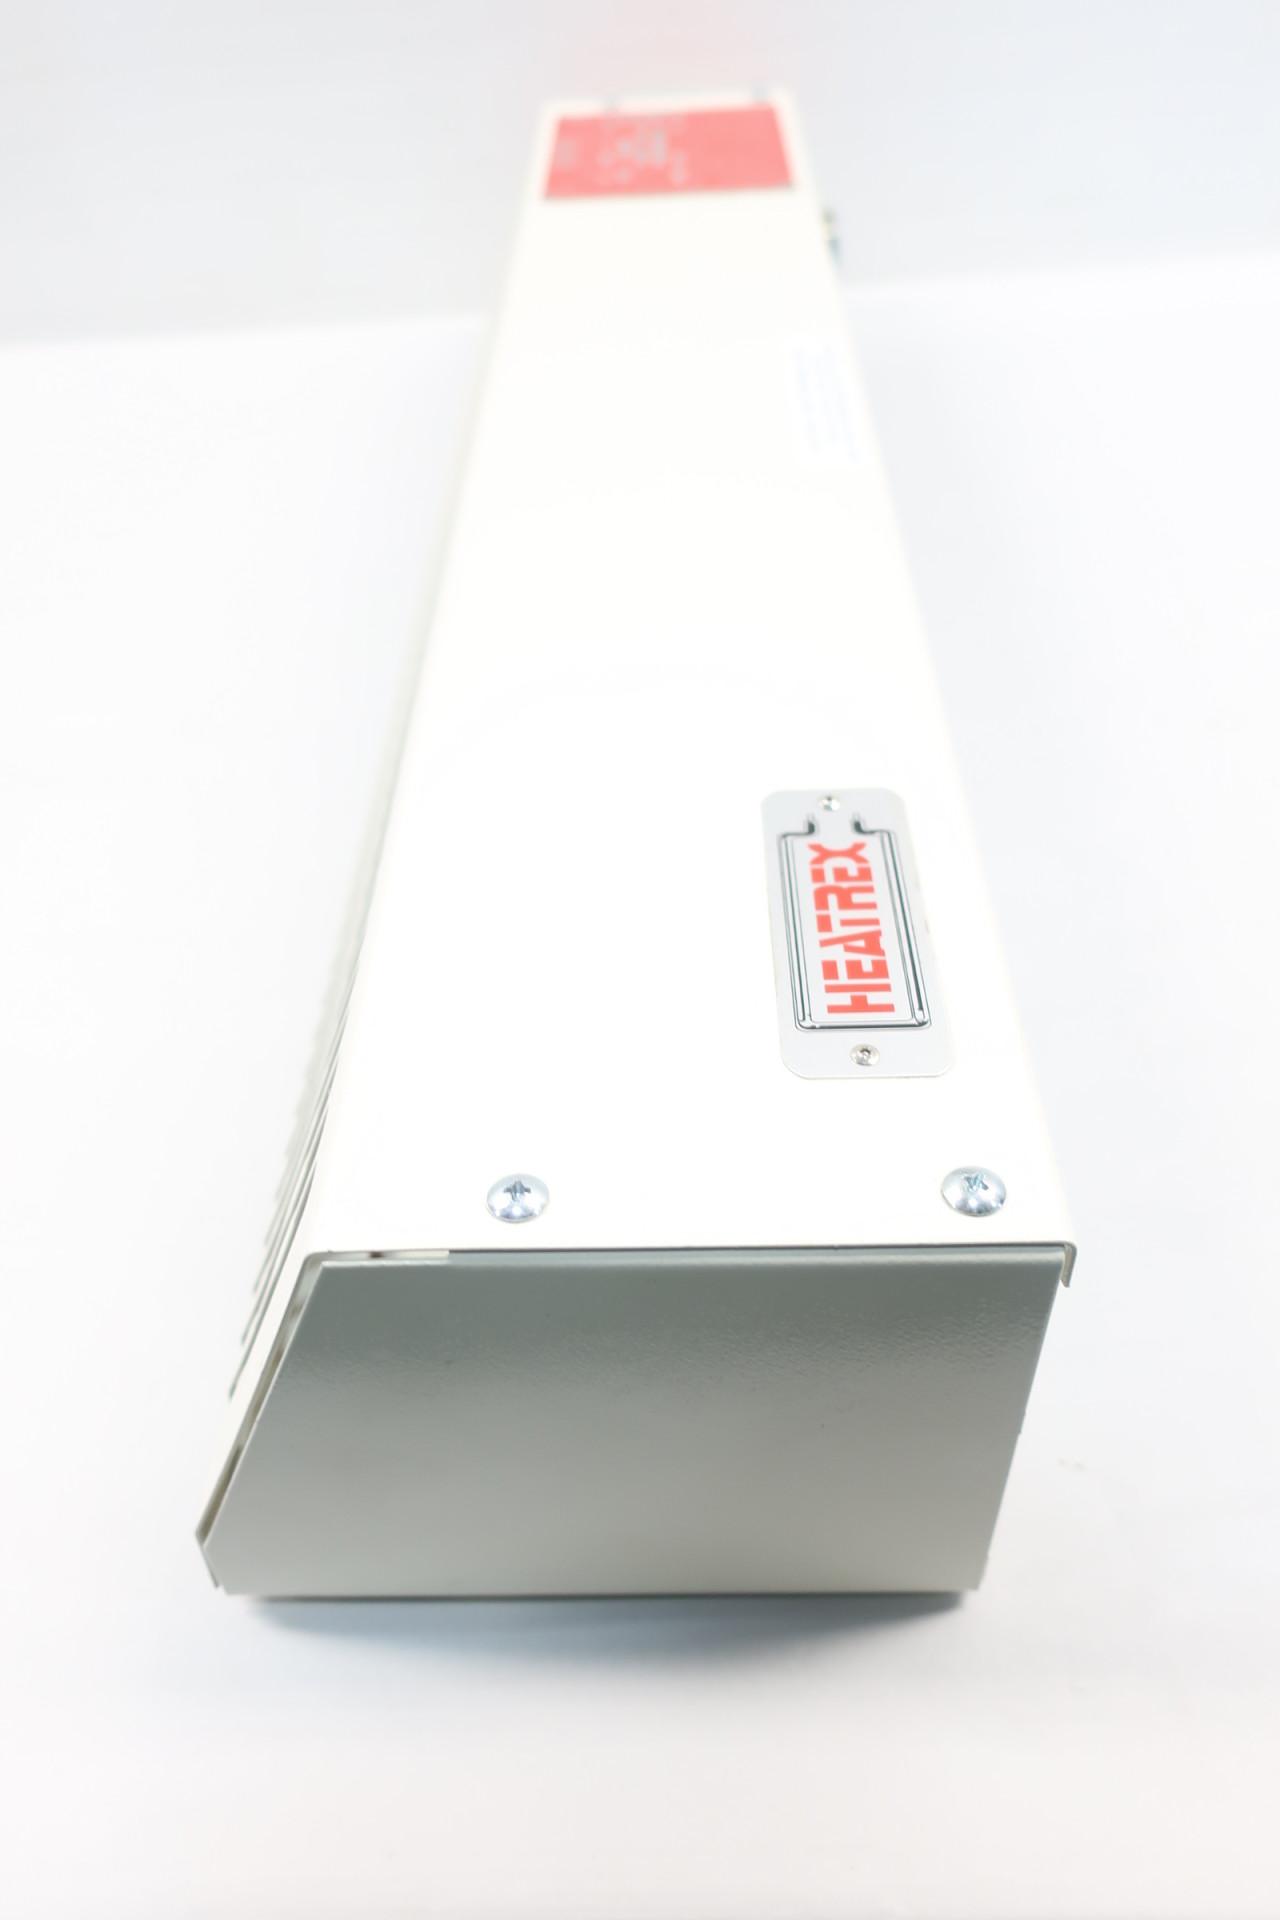 Details about   Heatrex HX-254-F0310102B Convection Air Heater 1000w 120v-ac 